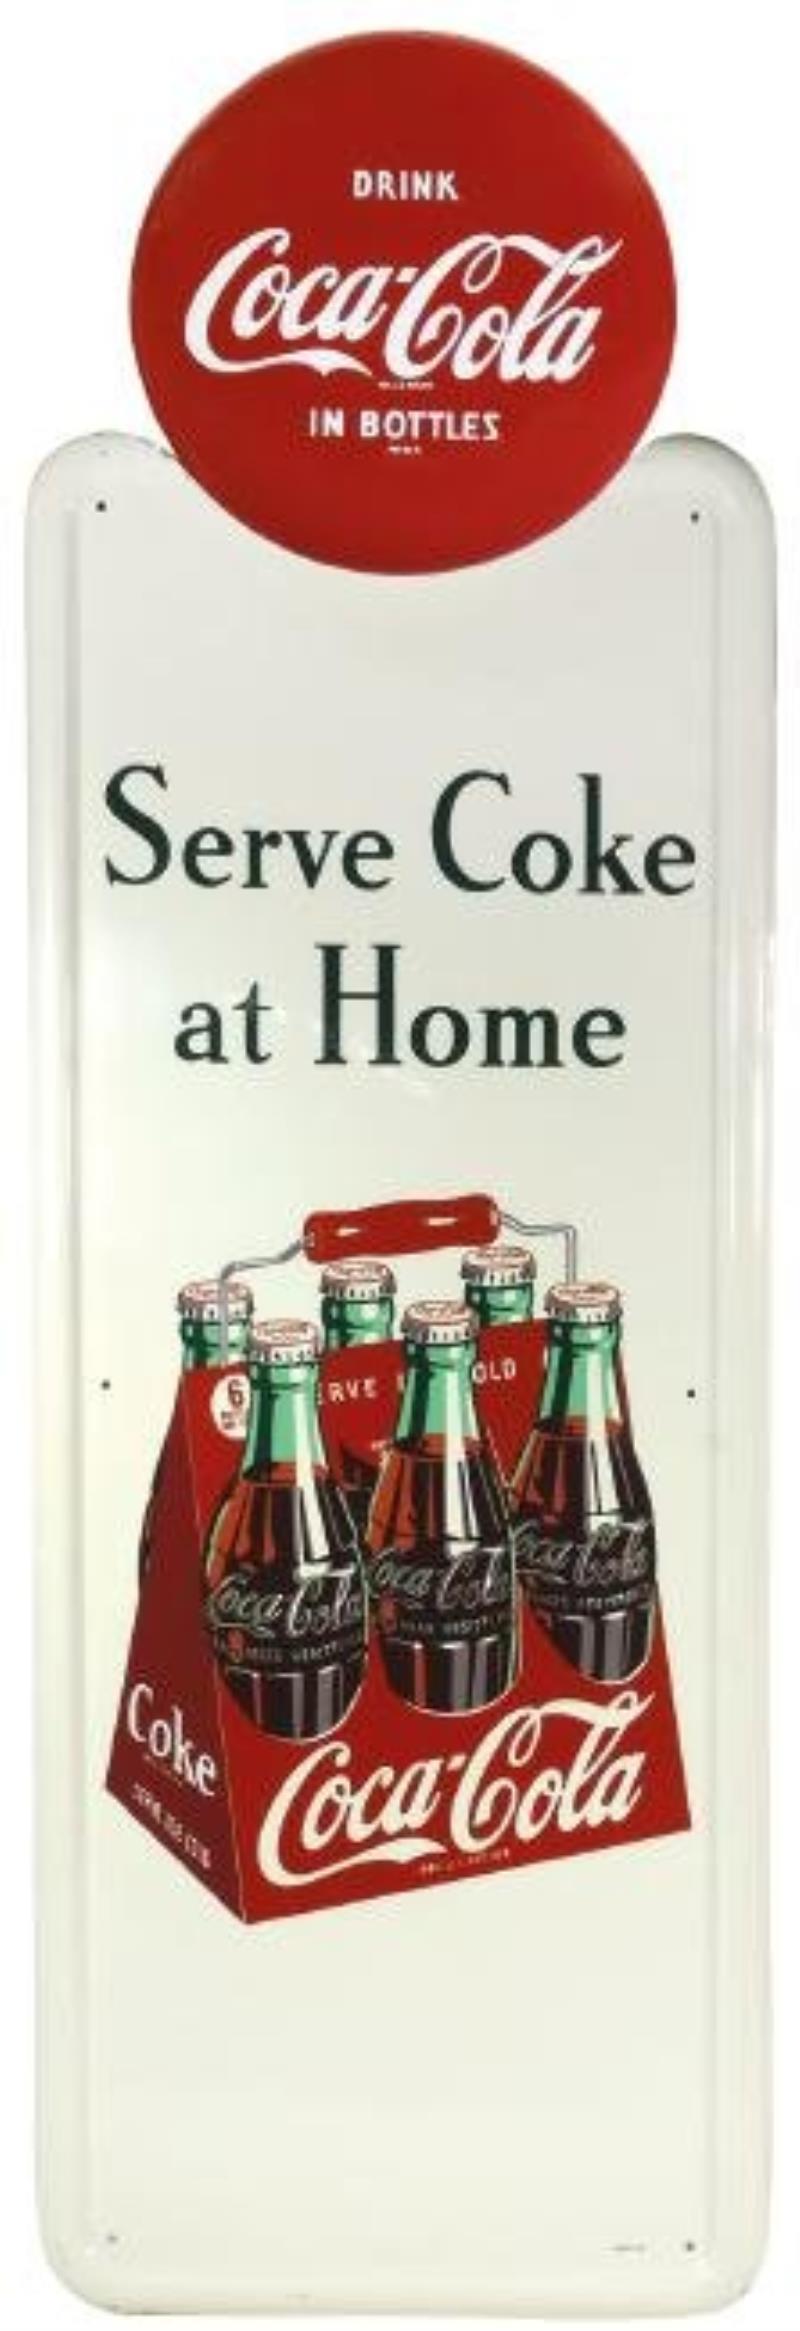 Coca-Cola sign, "Serve Coke at Home", 2-pc self-framed